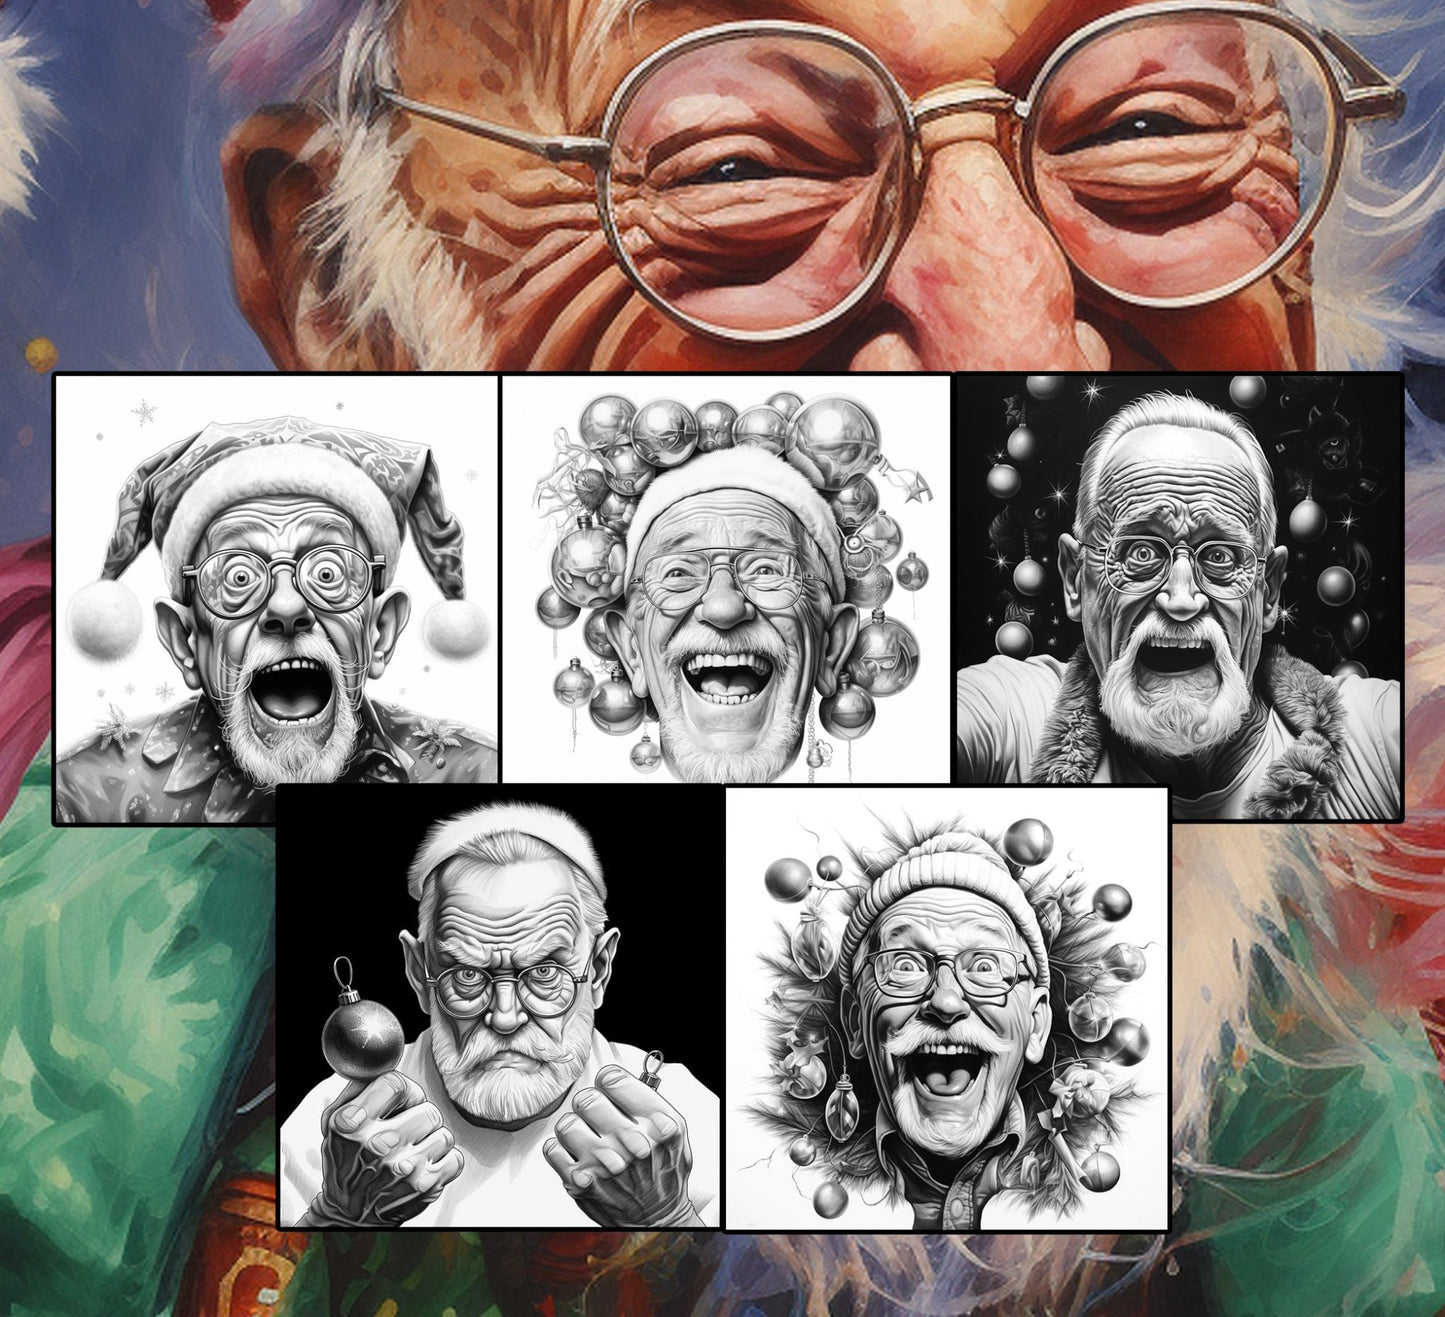 Crazy Grandpas on Christmas Coloring Book (Printbook) - Monsoon Publishing USA